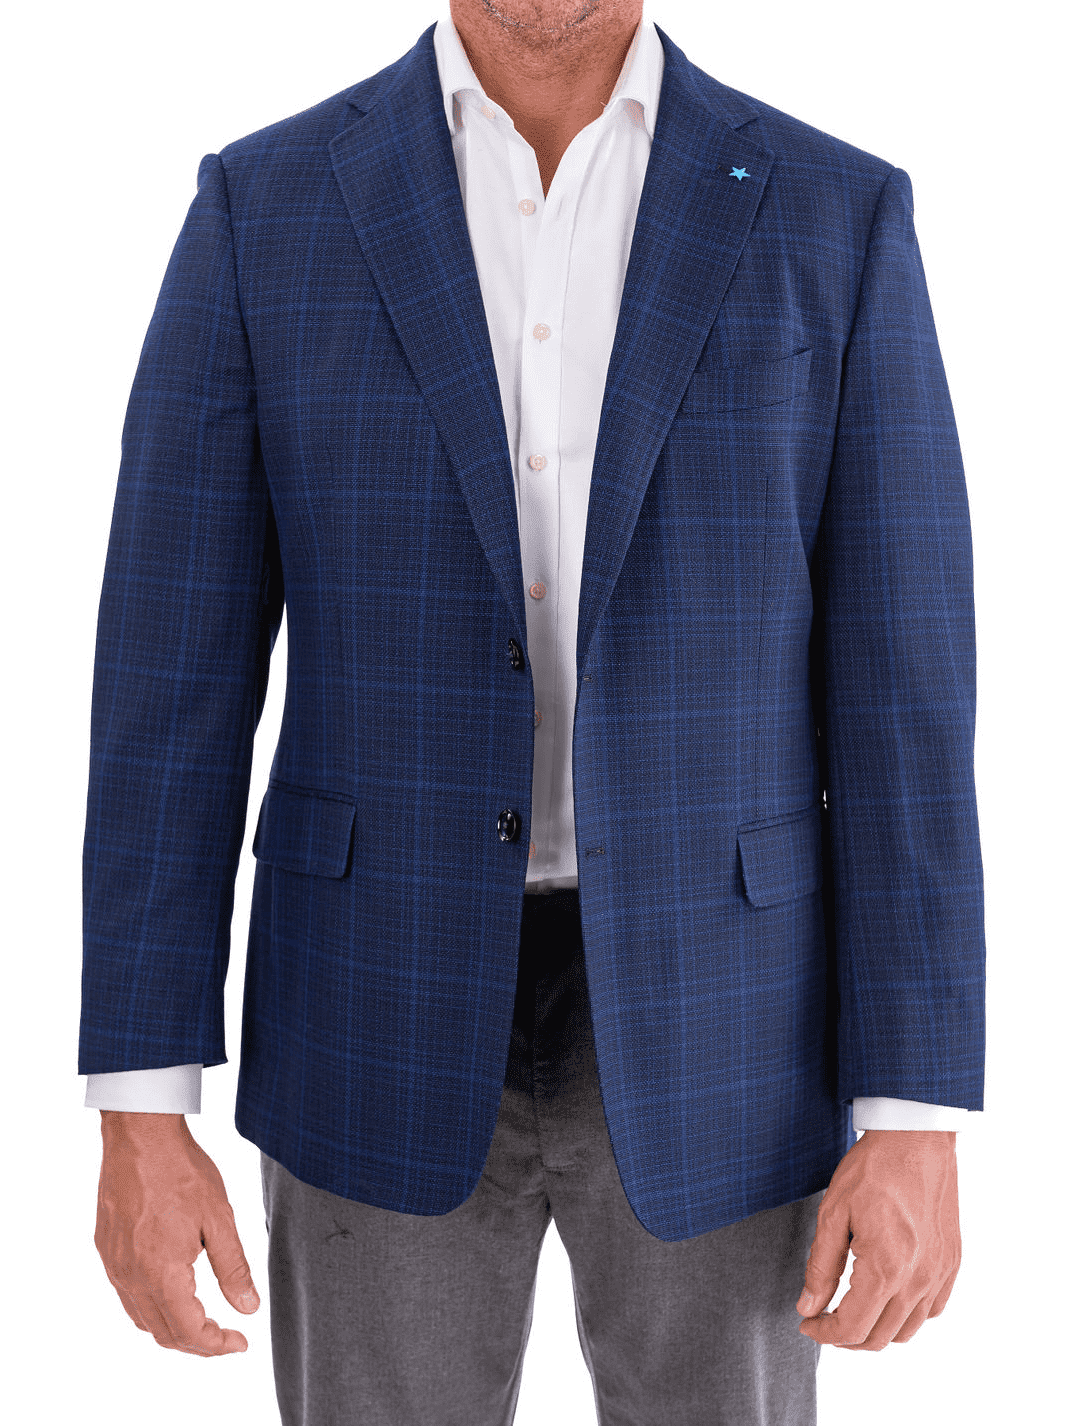 Bestfit Menswear  Men's Classic Fit Plaid Blazer 100% Wool Sport Coat